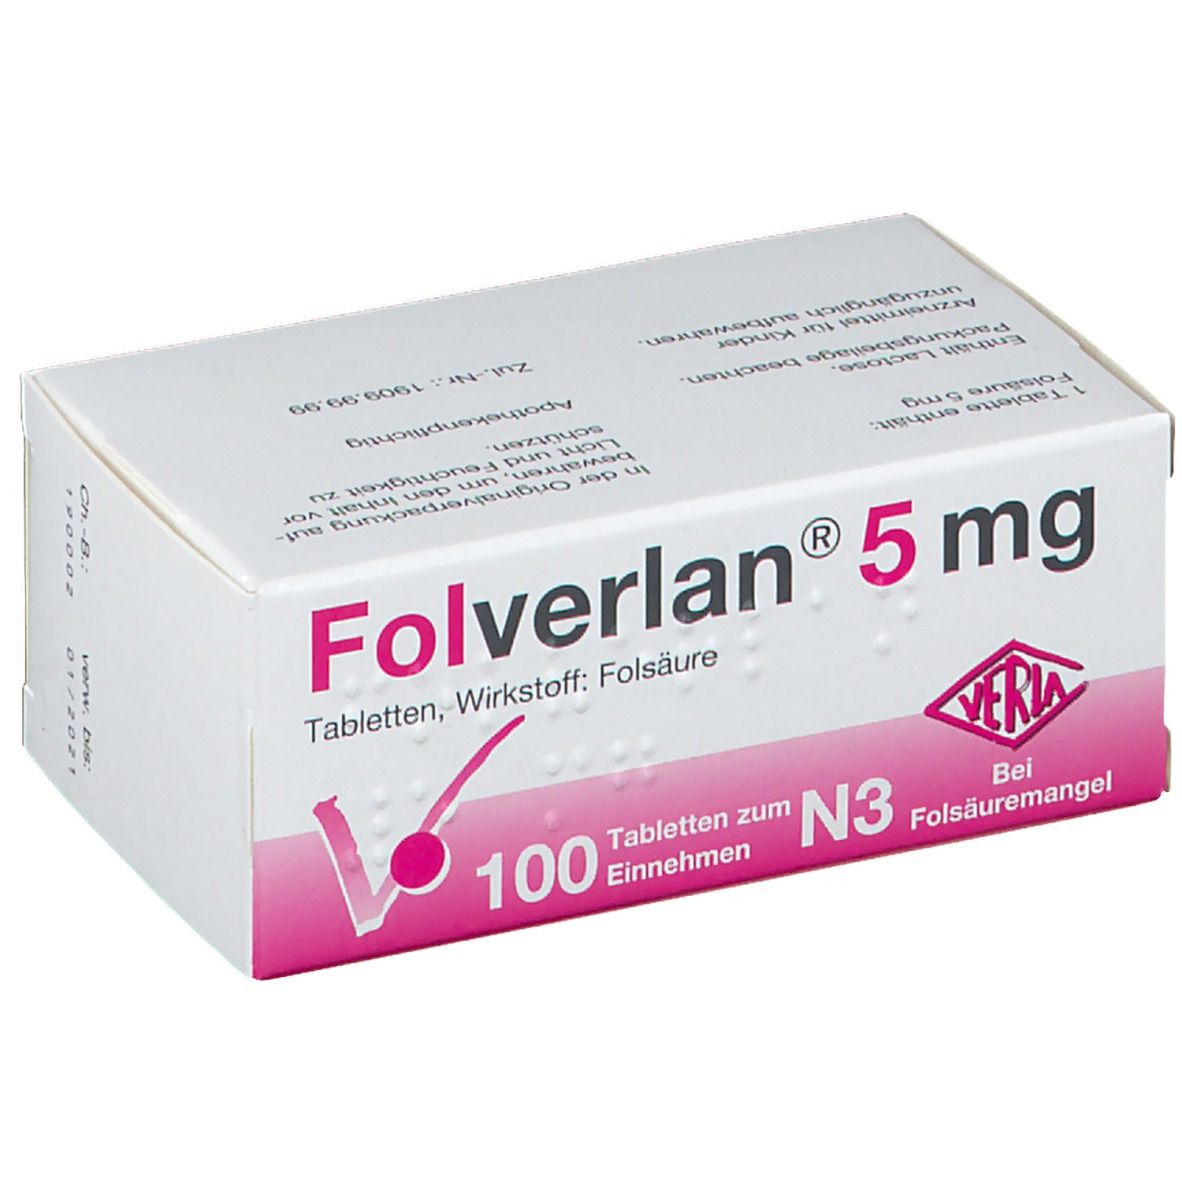 Folverlan® 5 mg Tabletten